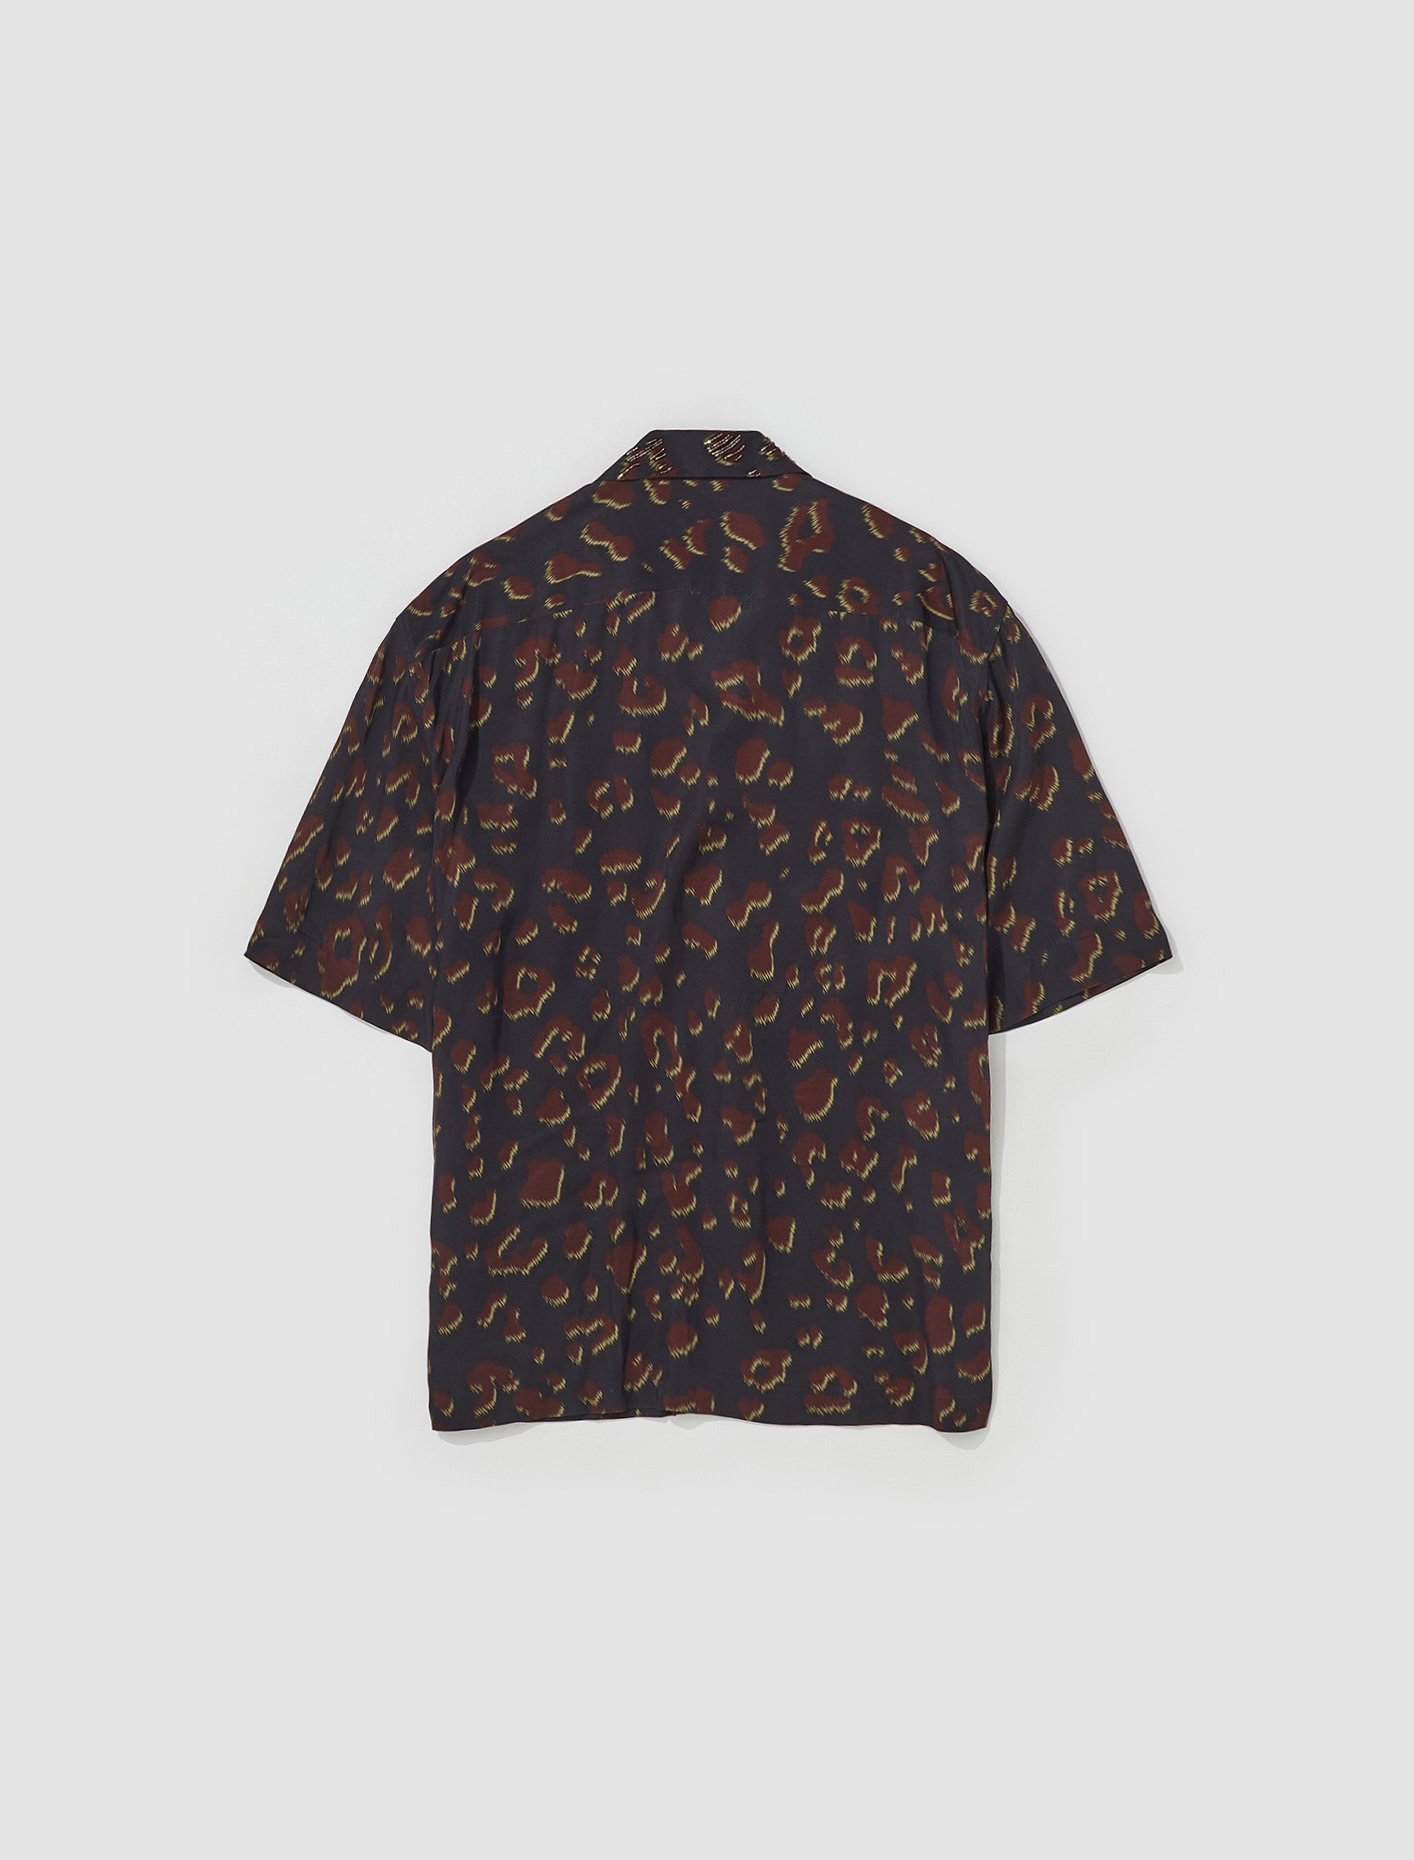 Dries Van Noten Cassi Hawaiian Short Sleeve Shirt with Embroidery in Black